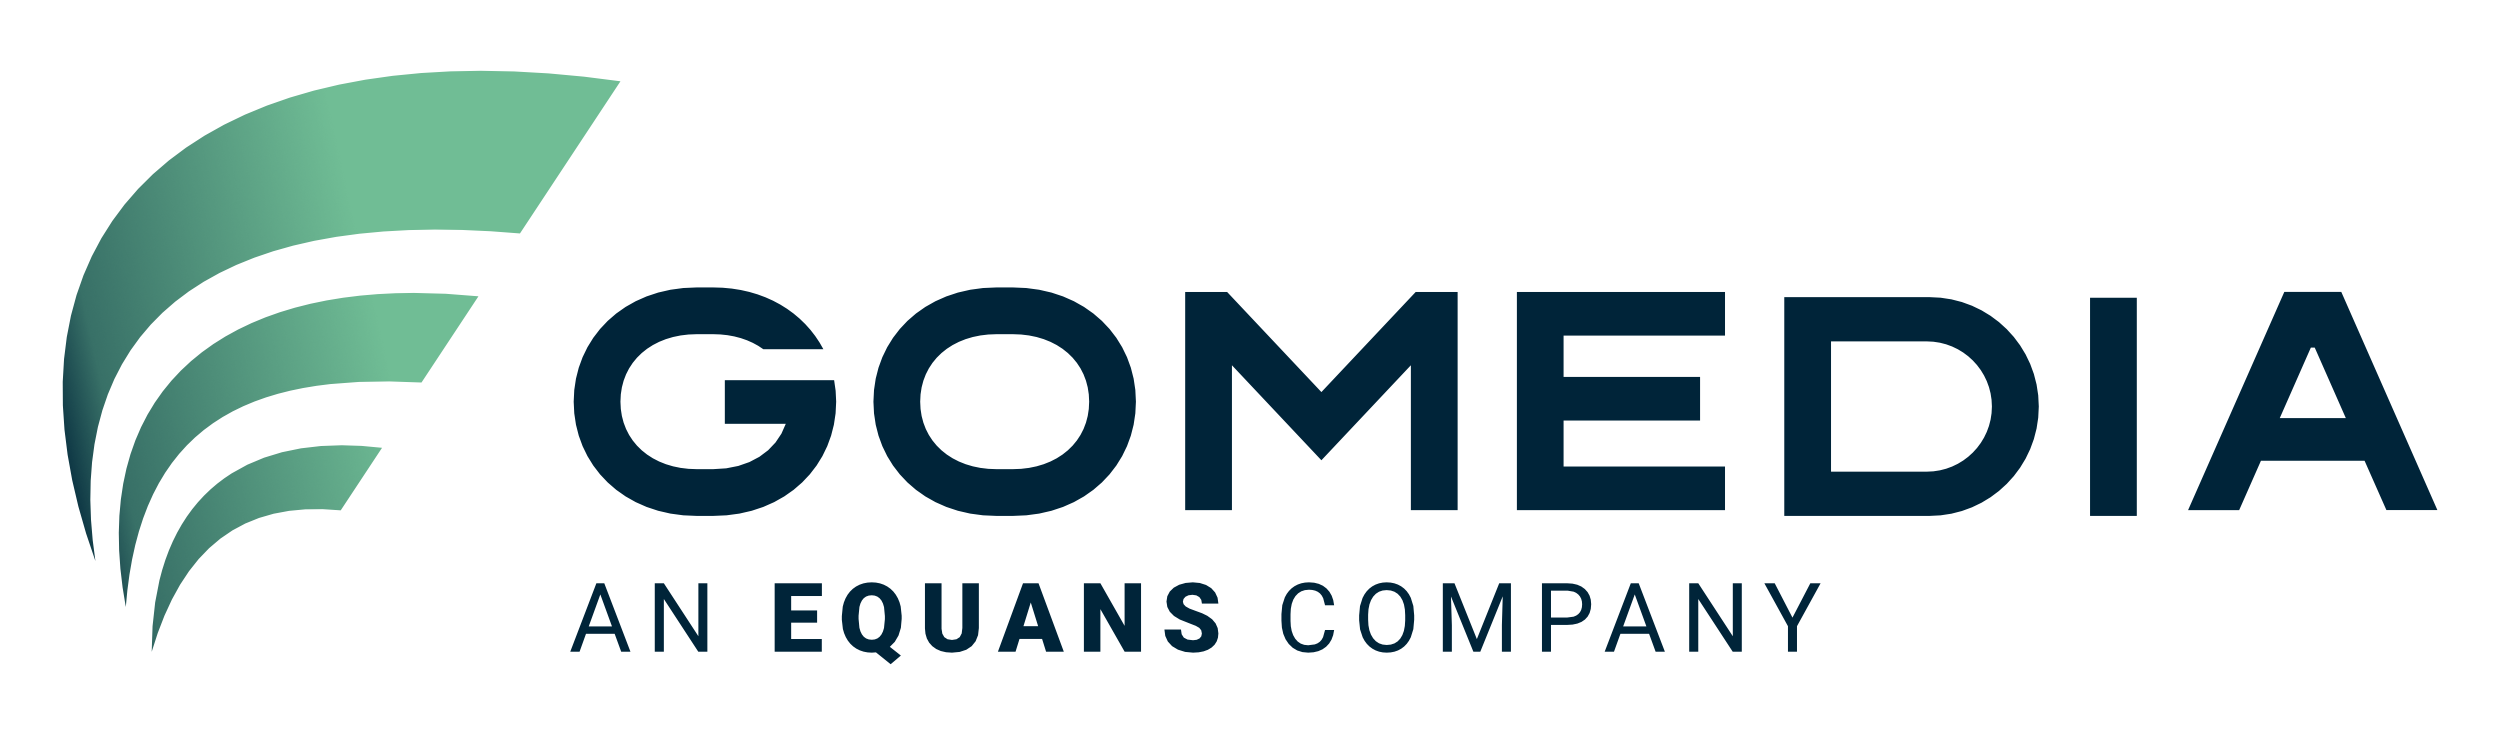 GoMedia logo